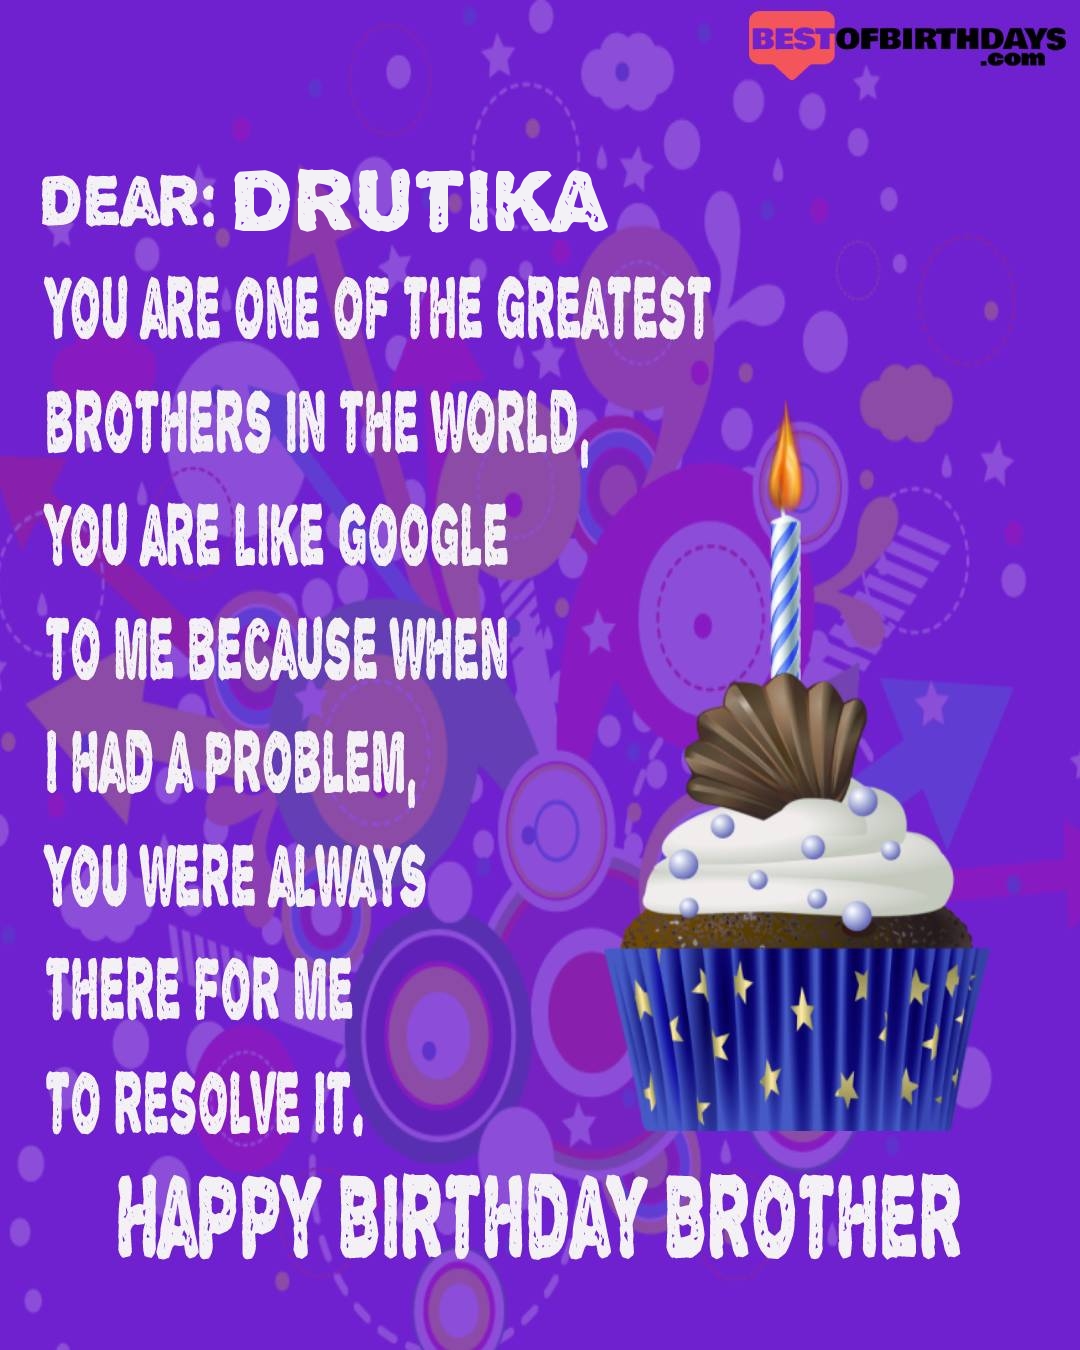 Happy birthday drutika bhai brother bro